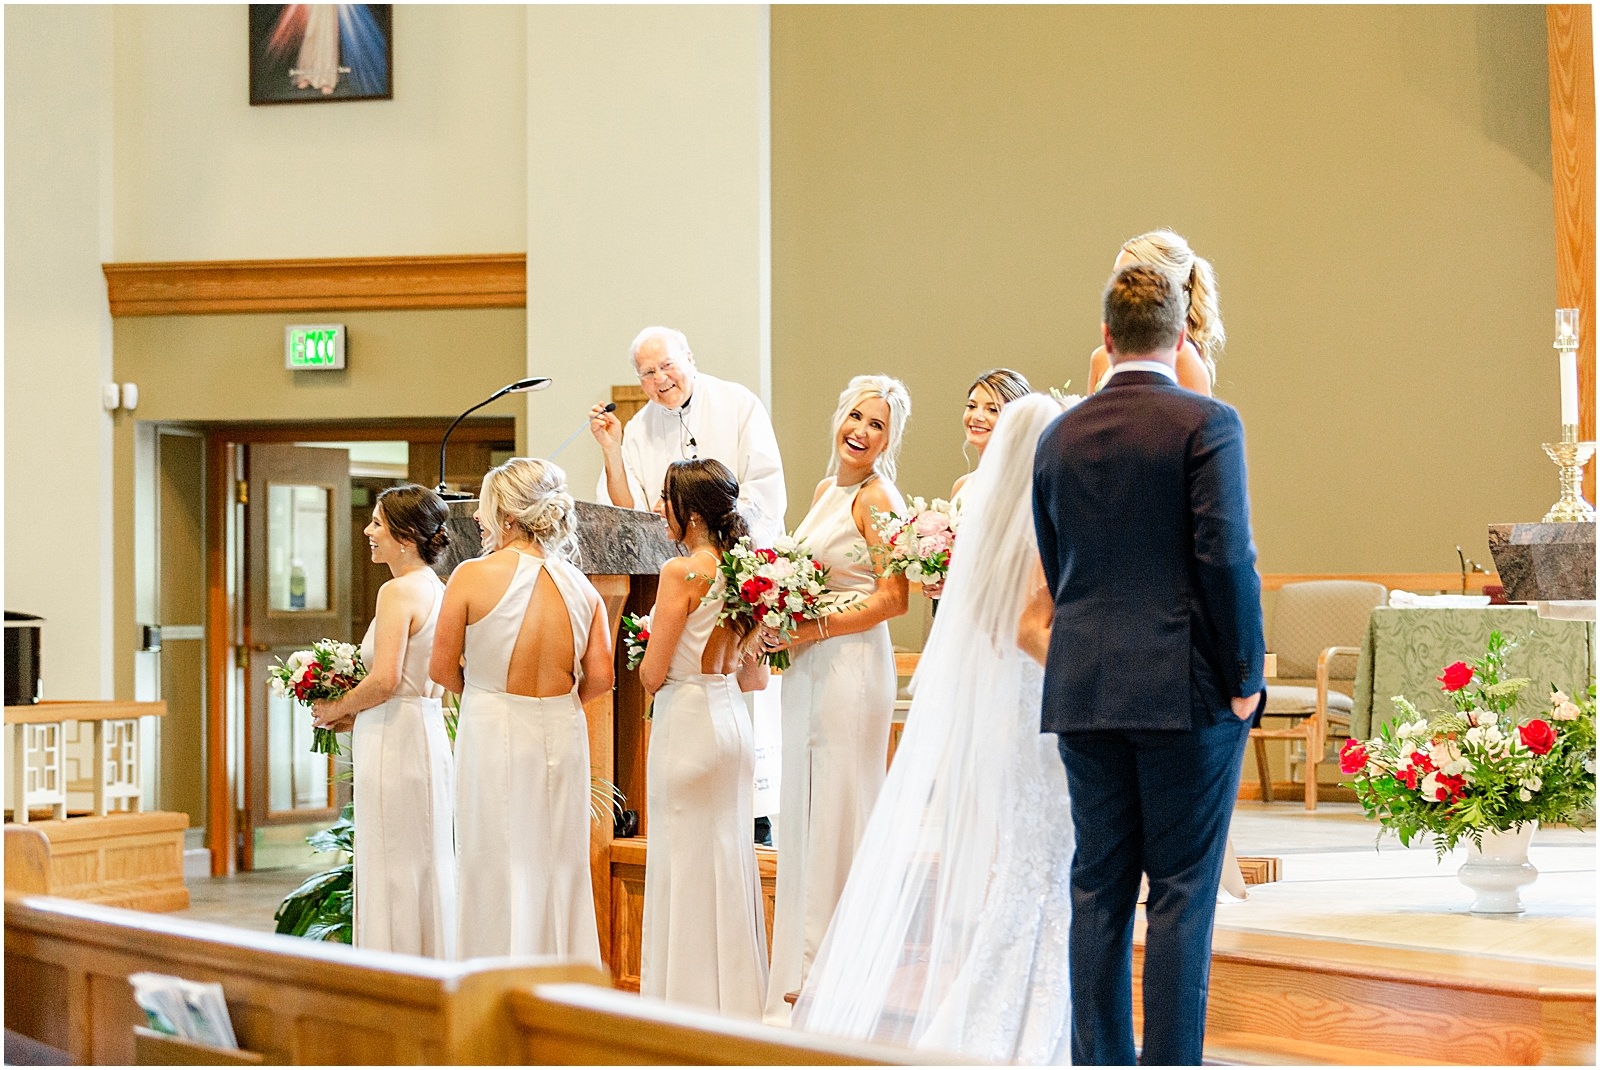 An Evansville Country Club Wedding | Madison and Christiaan | Bret and Brandie | Evansville Photographers | @bretandbrandie-0125.jpg